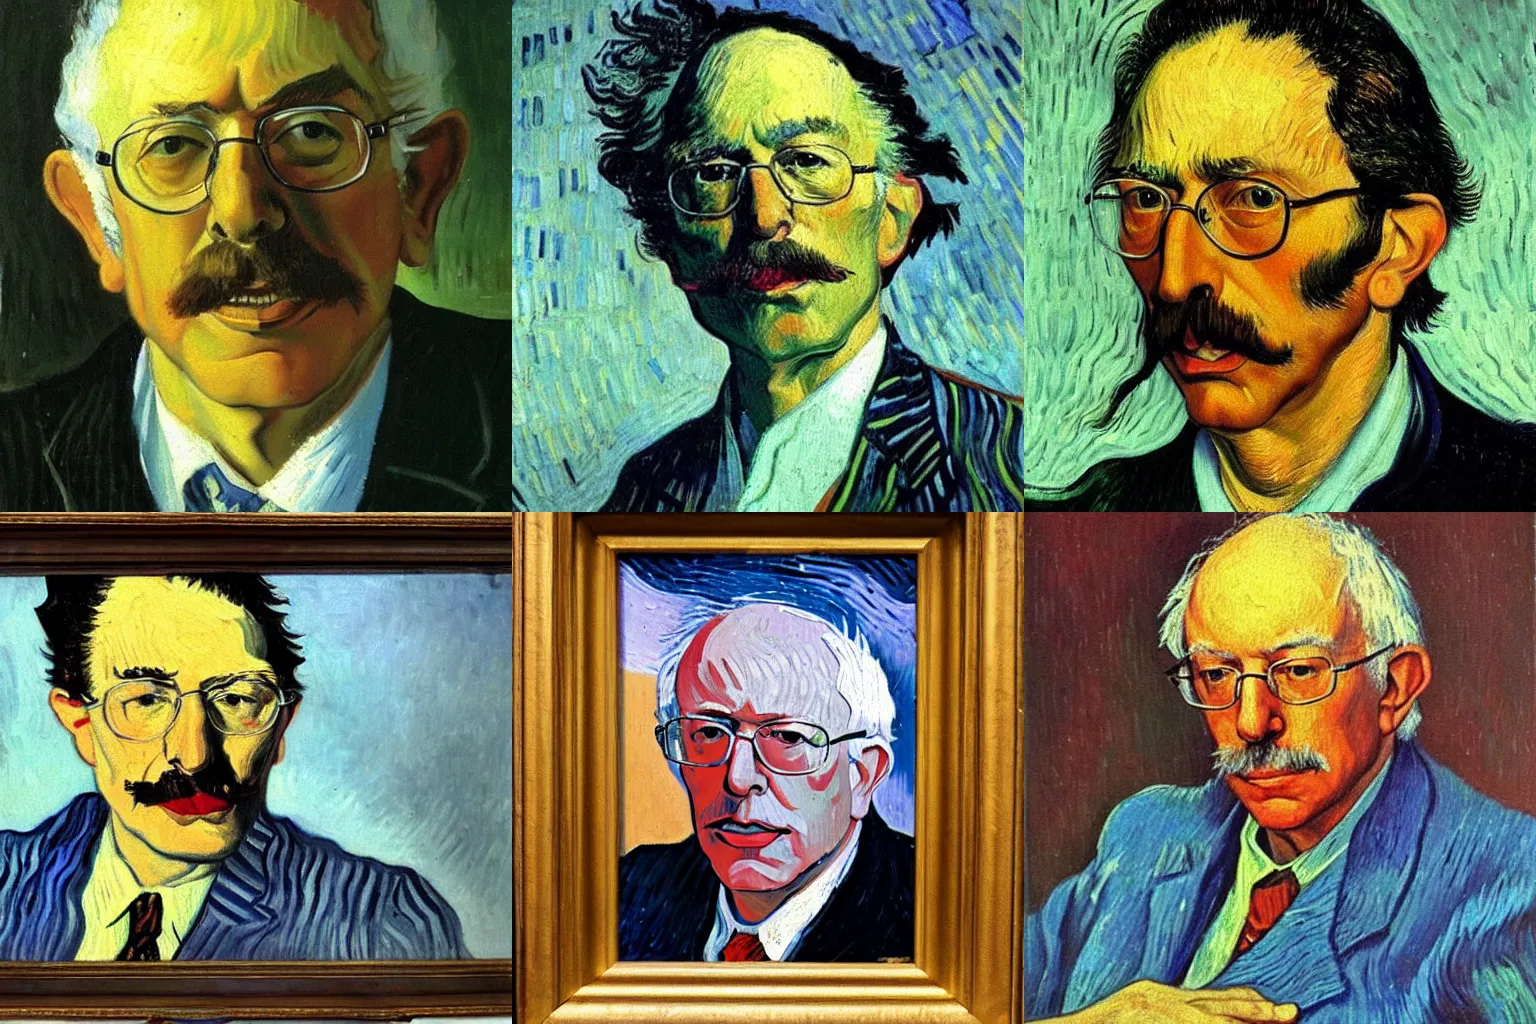 Prompt: oil painting of a portrait of Bernie Sanders by Salvador Dalí and Vincent Van Gogh